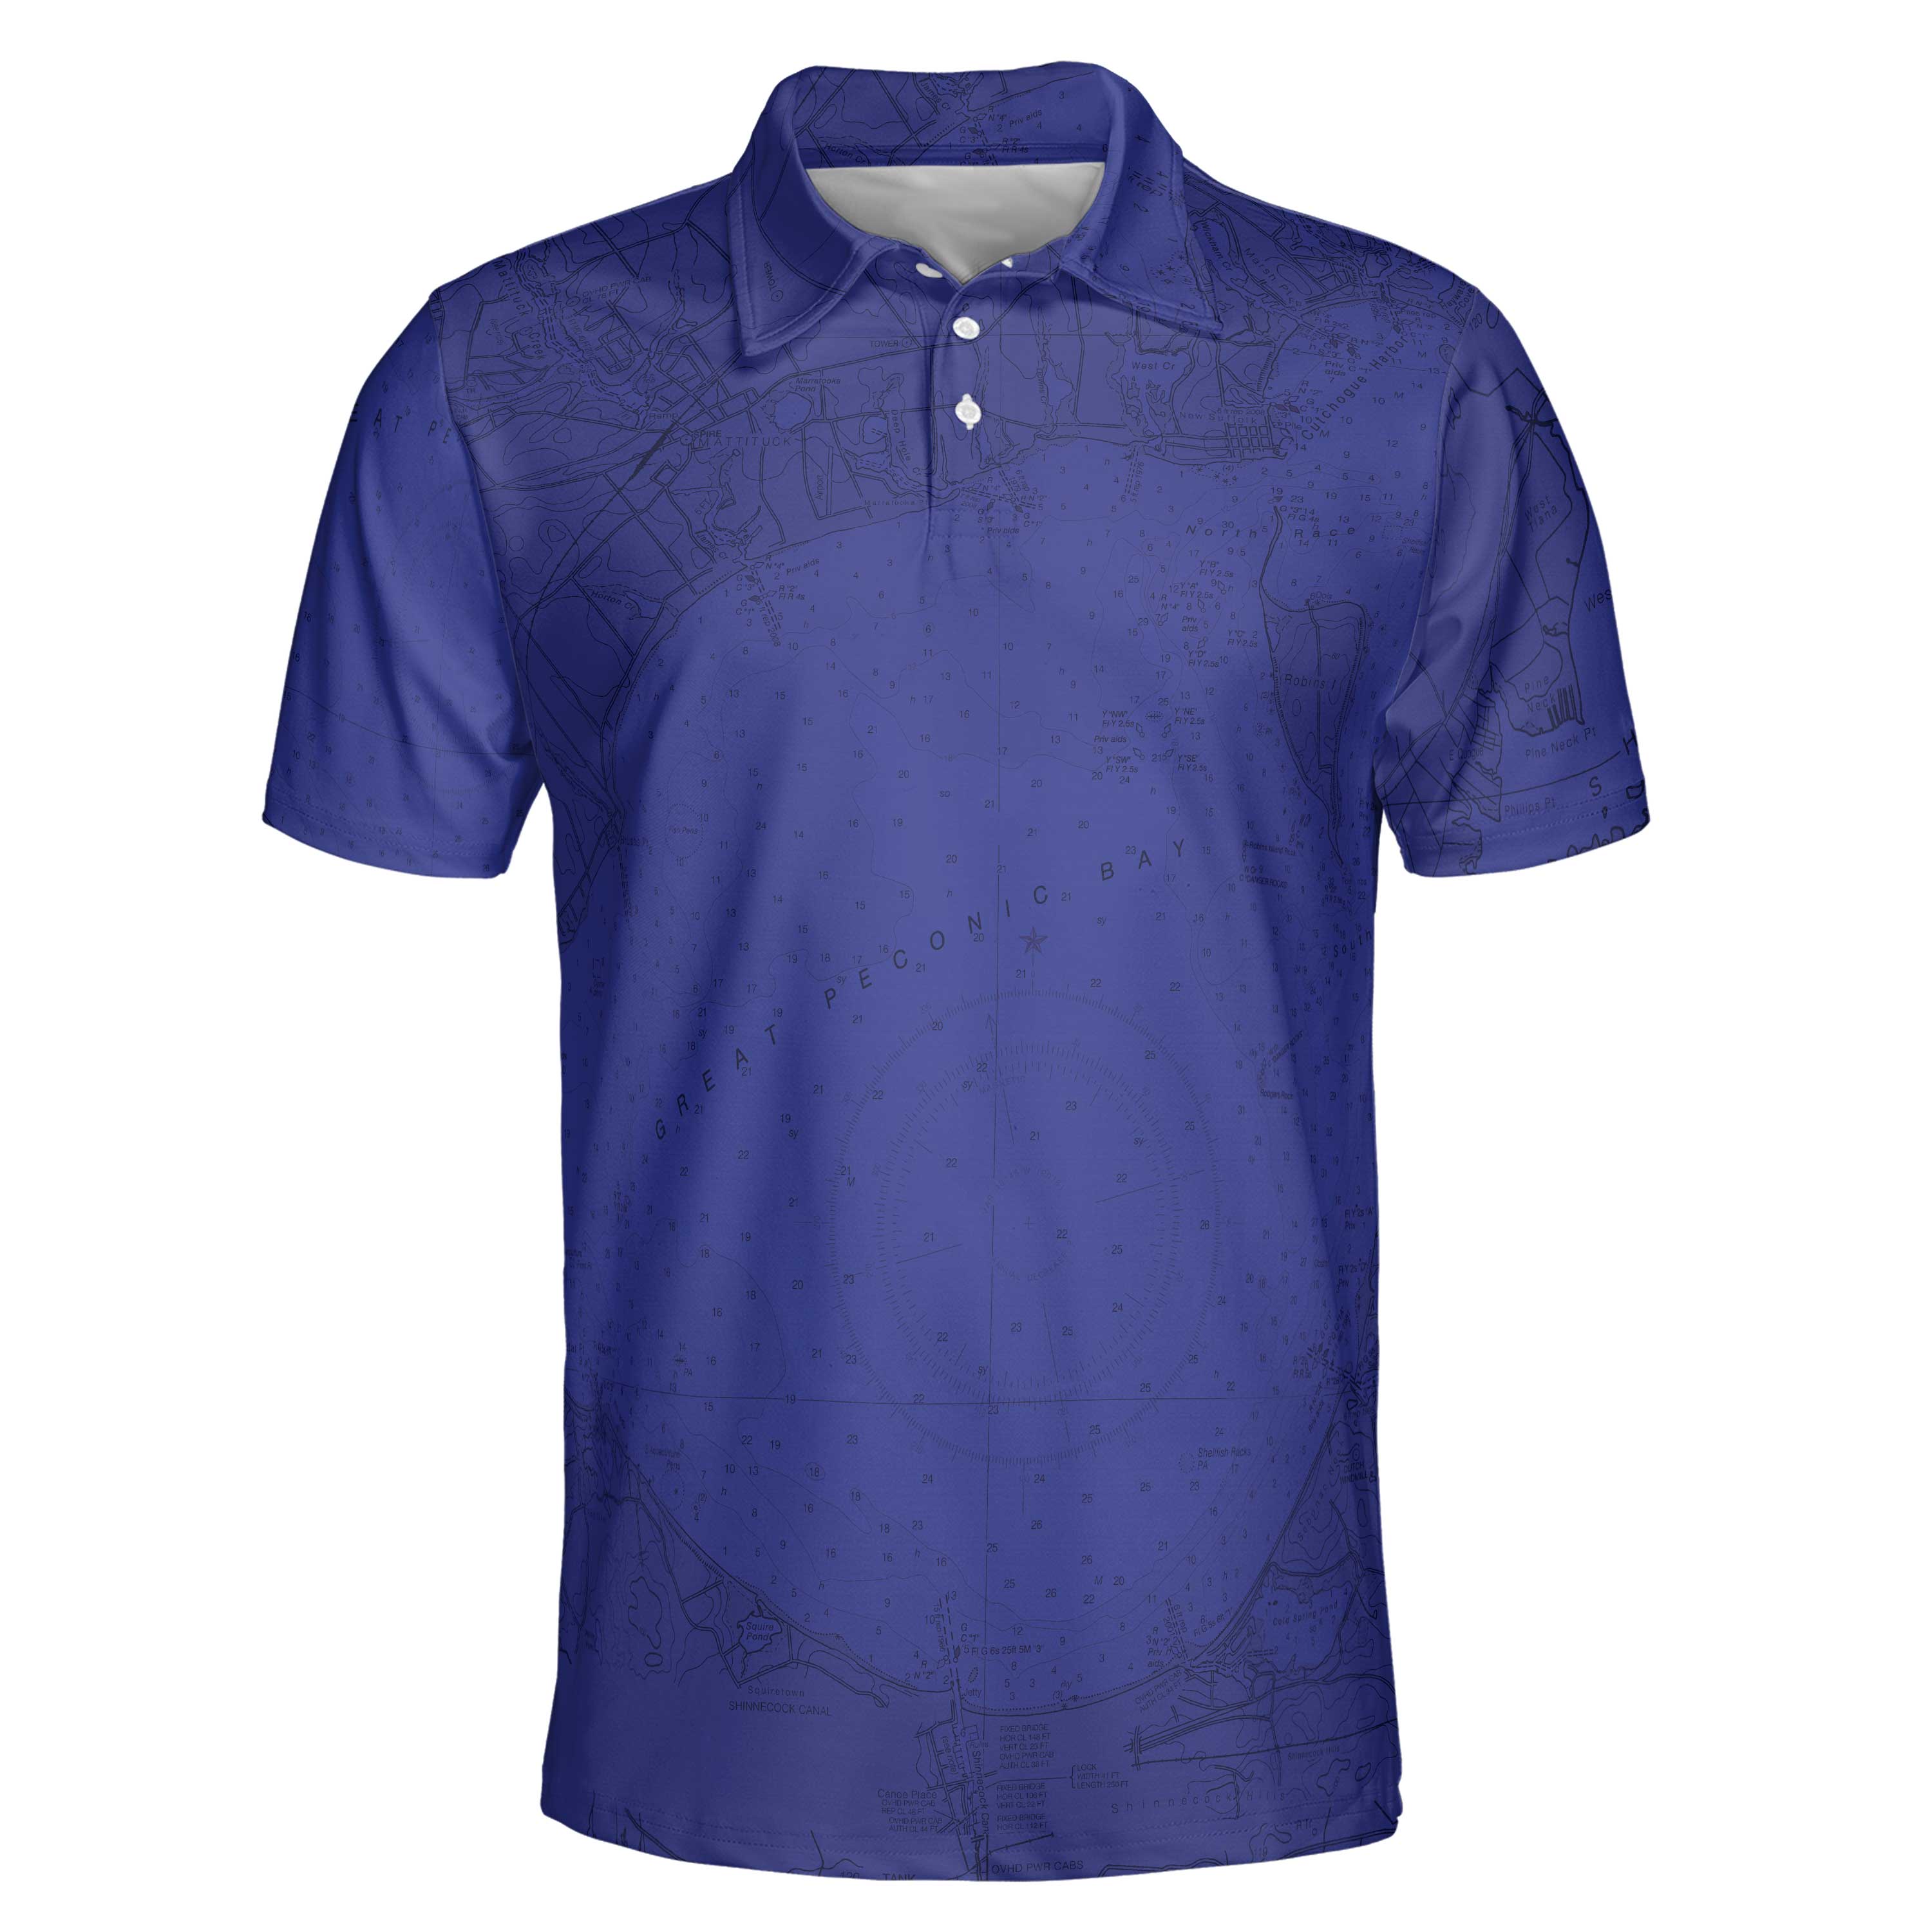 The Peconic Bay Deep Blue Polo Shirt